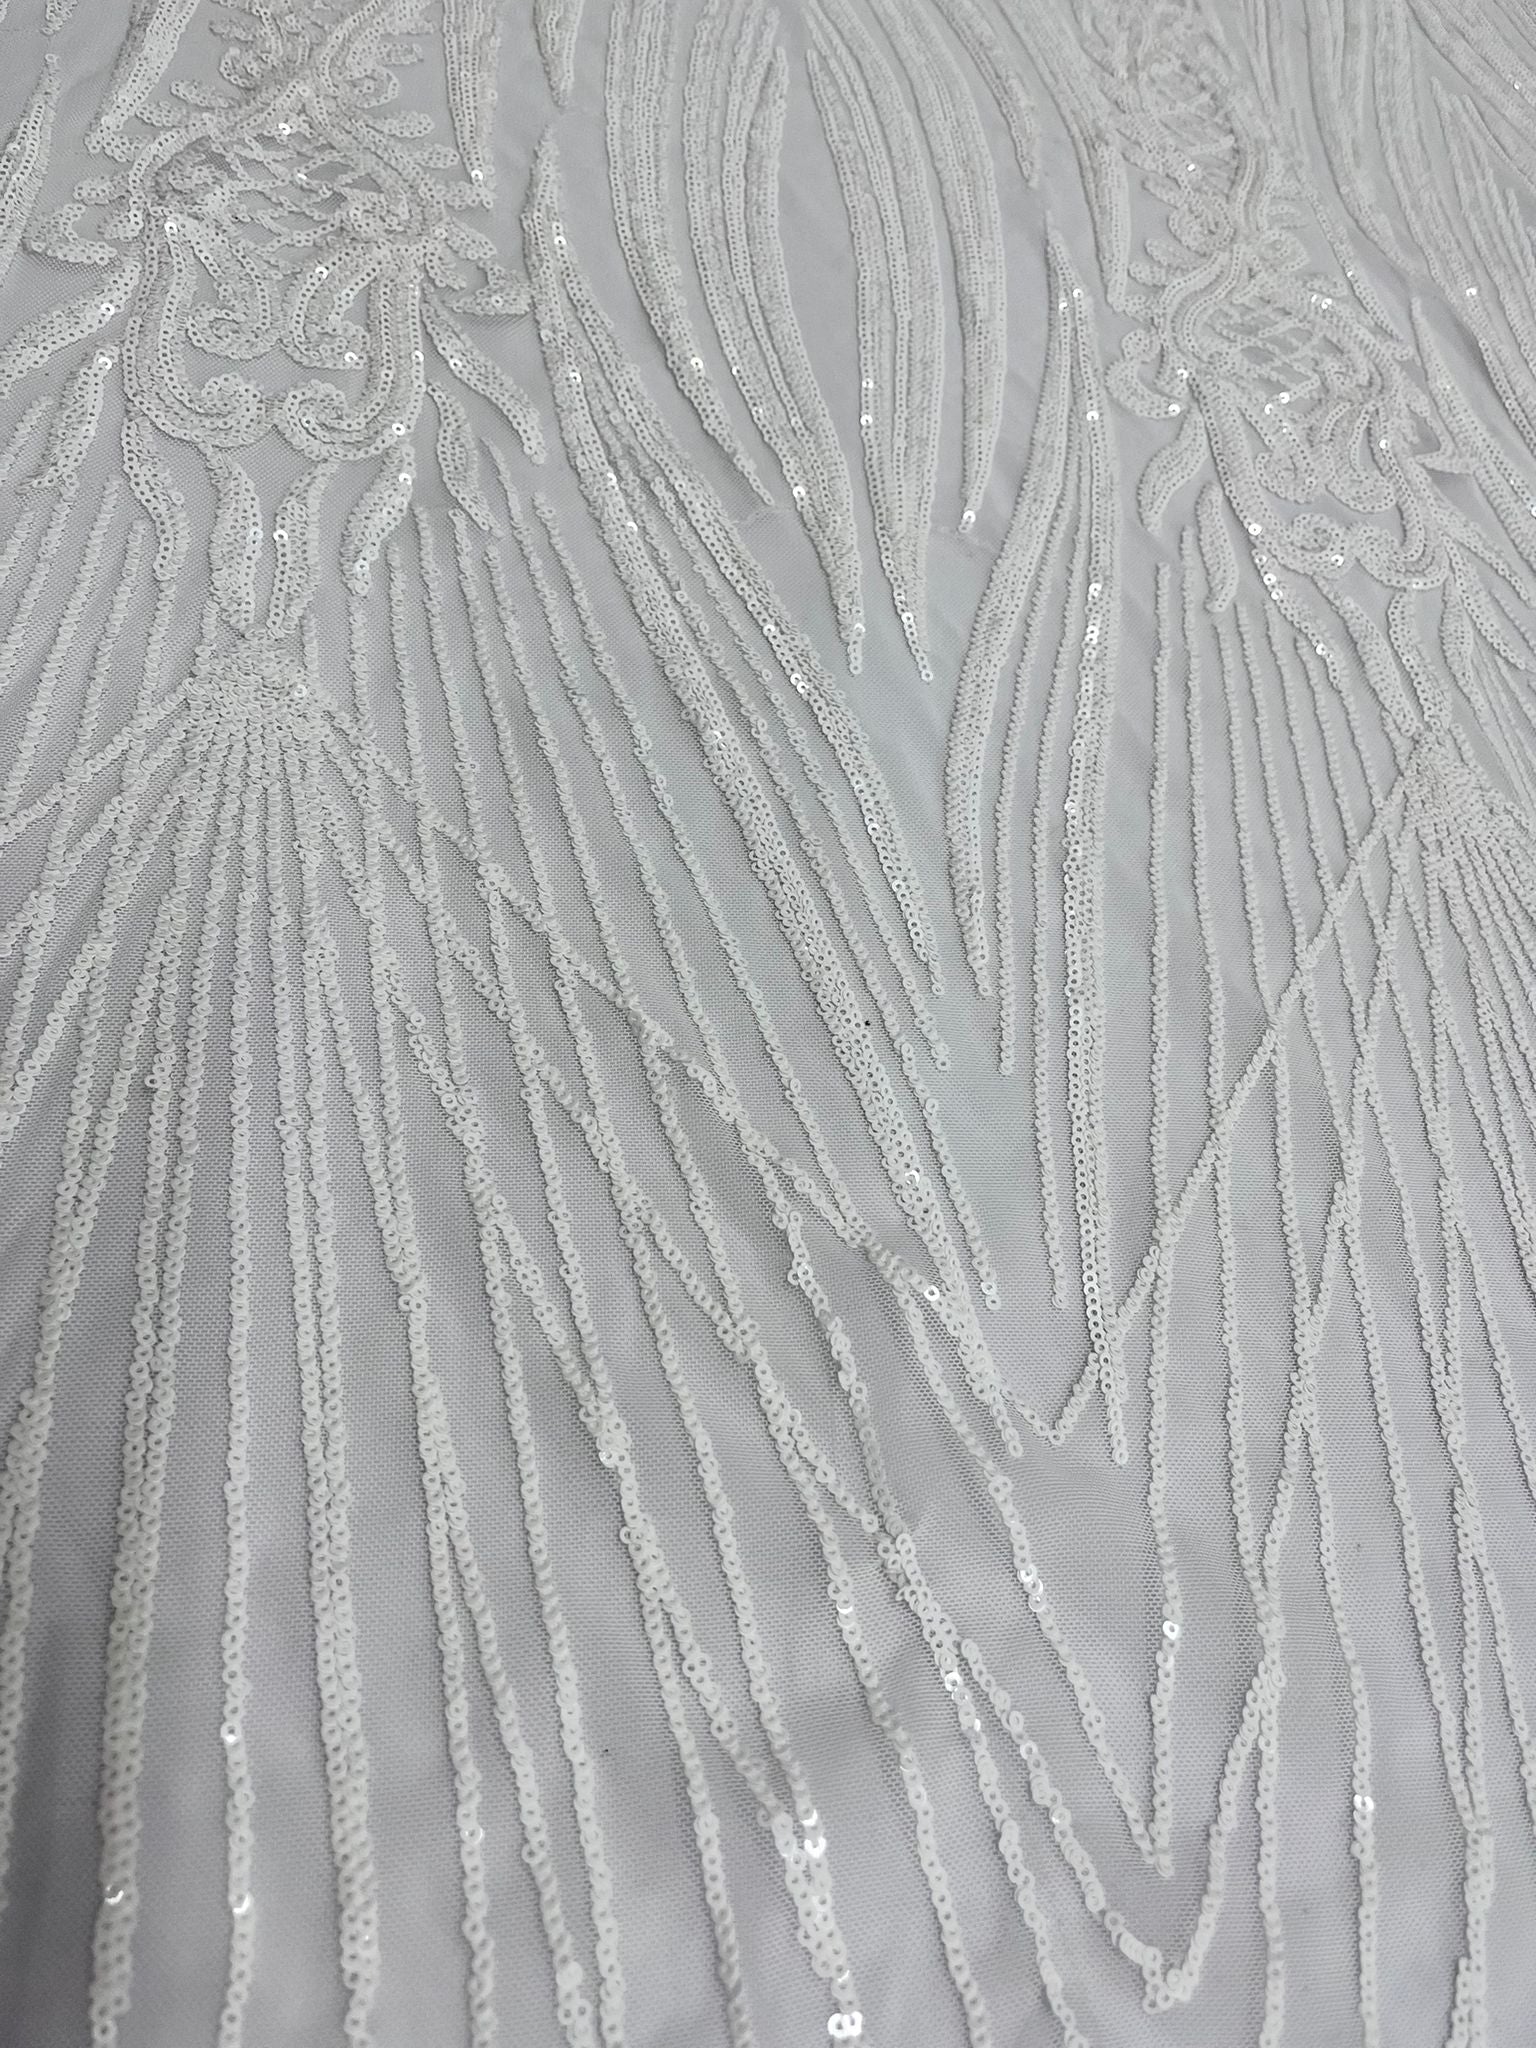 Geometric 4 Way Stretch Sequin Fabric | White | Embroidered FabricICE FABRICSICE FABRICSSample (Swatch)Geometric 4 Way Stretch Sequin Fabric | White | Embroidered Fabric ICE FABRICS